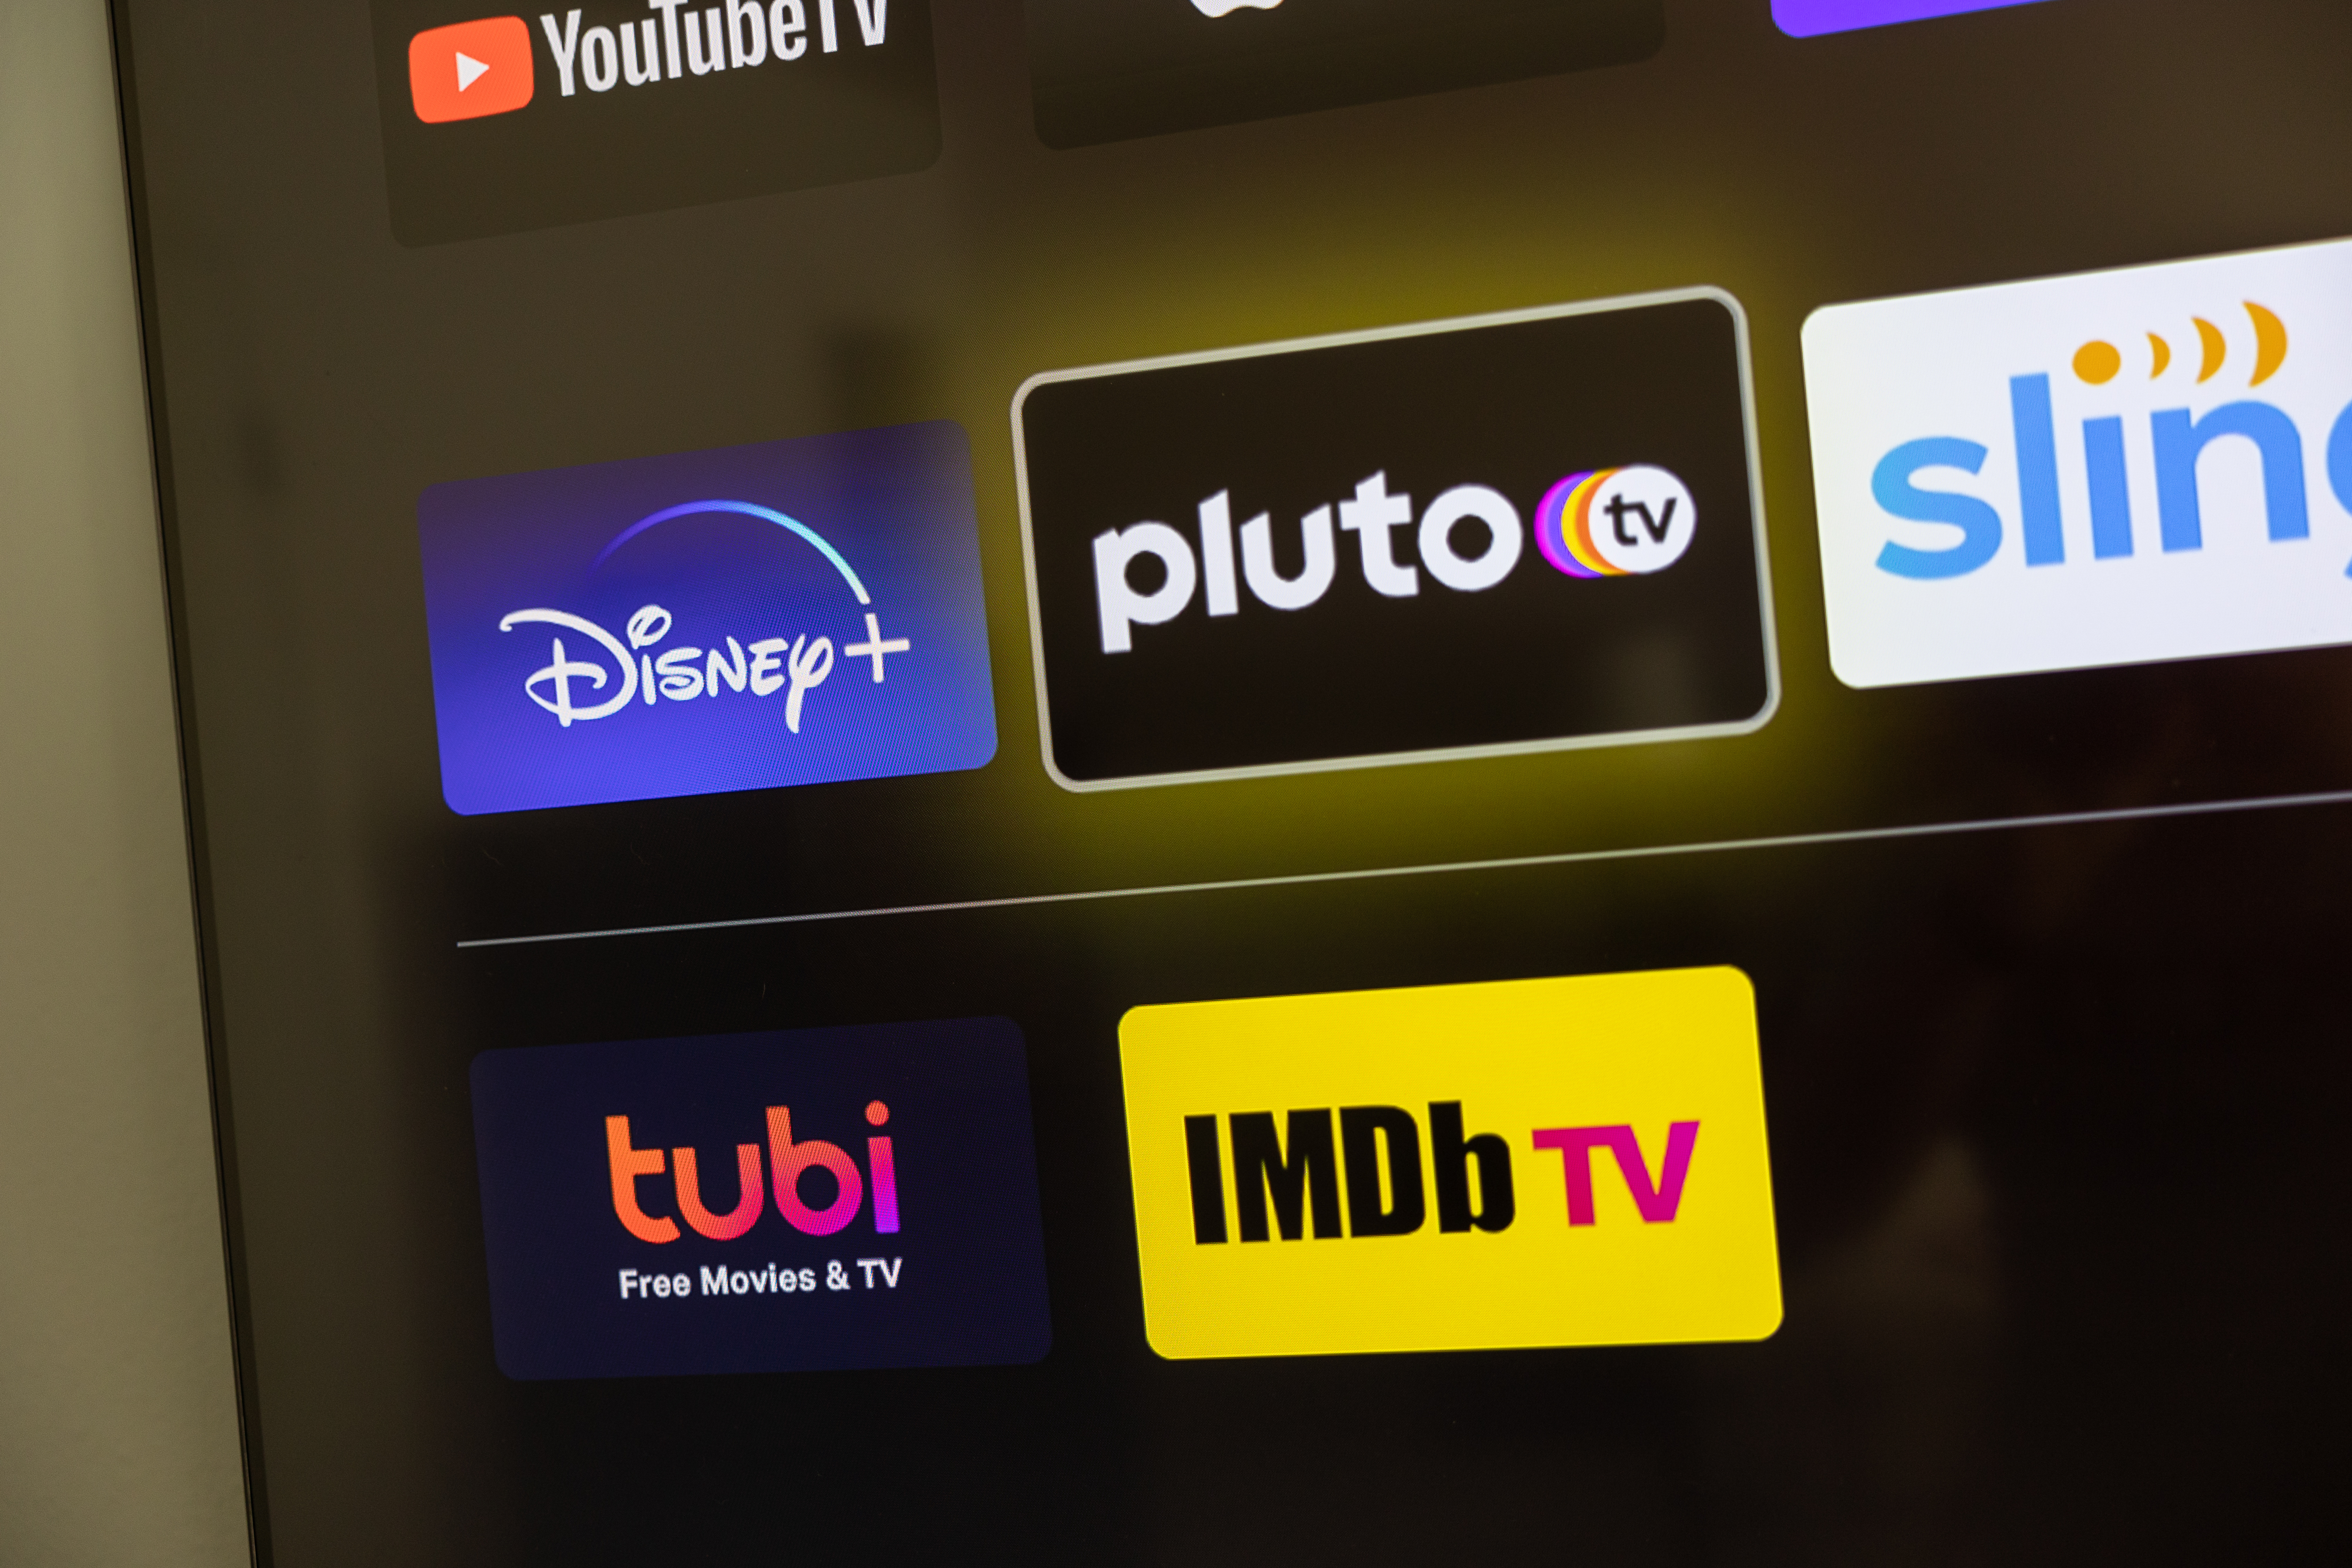 Pluto TV - Microsoft Apps